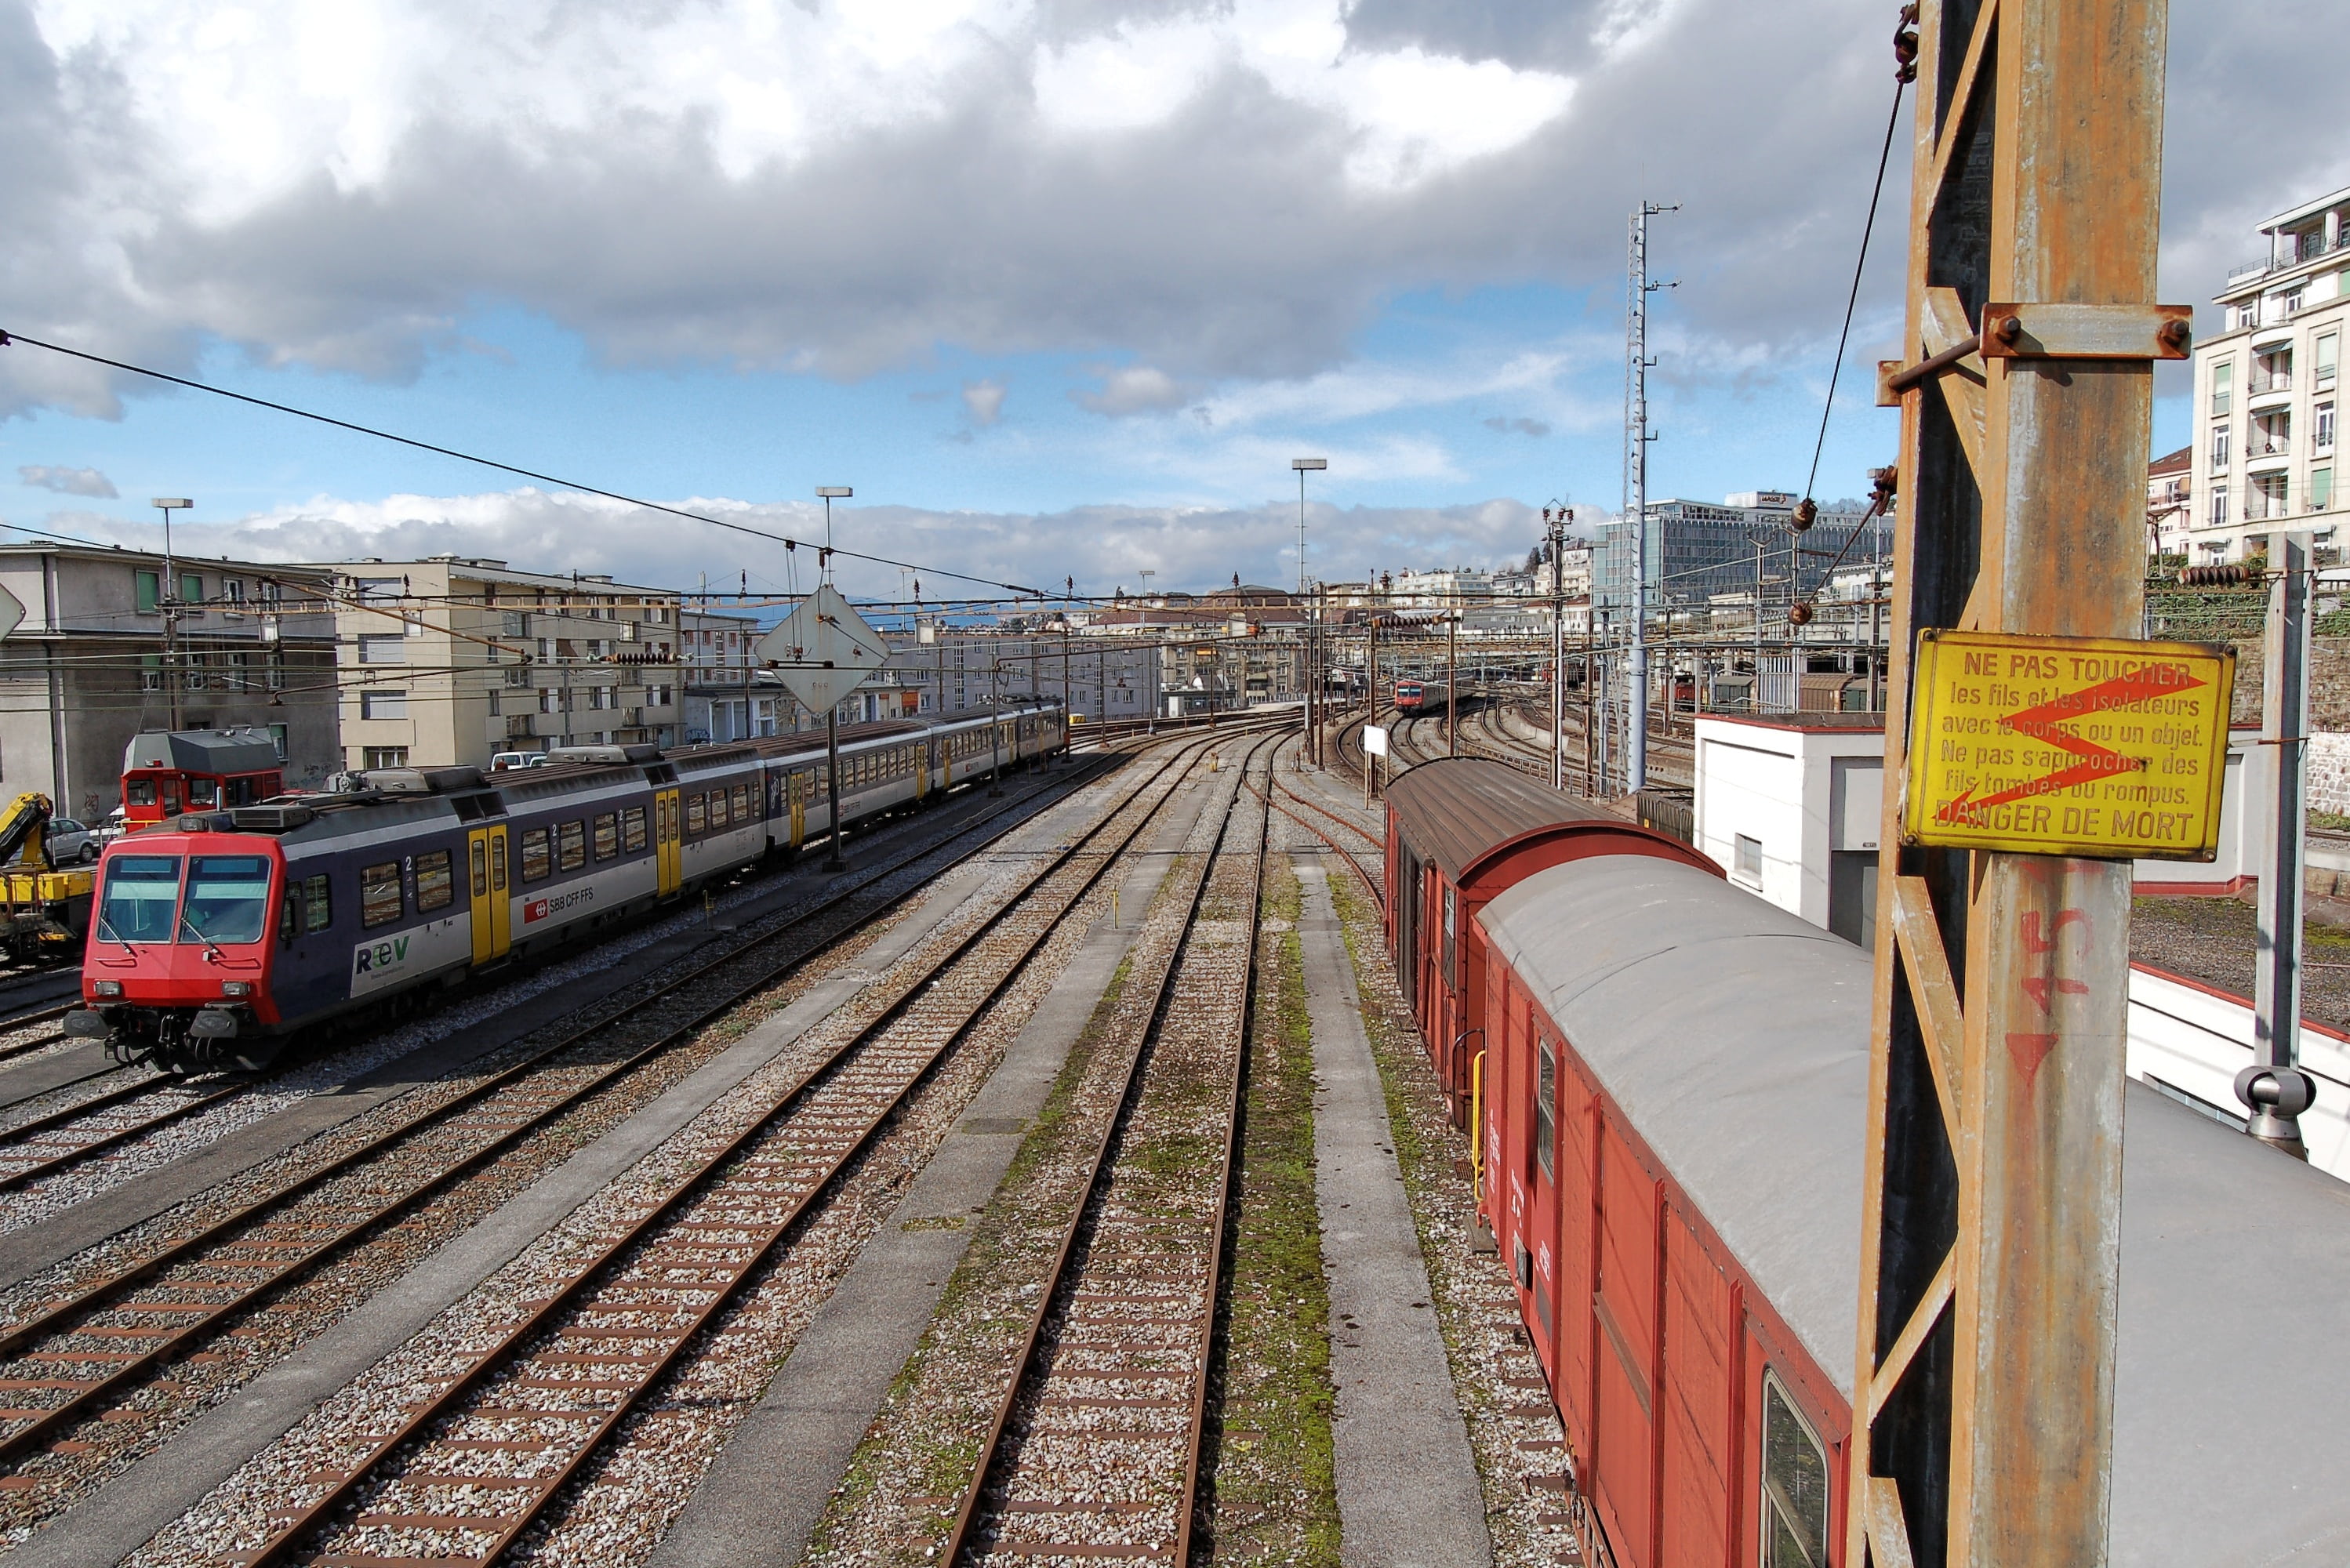 seemed, railway station, lausanne, switzerland, sbb, rail transportation